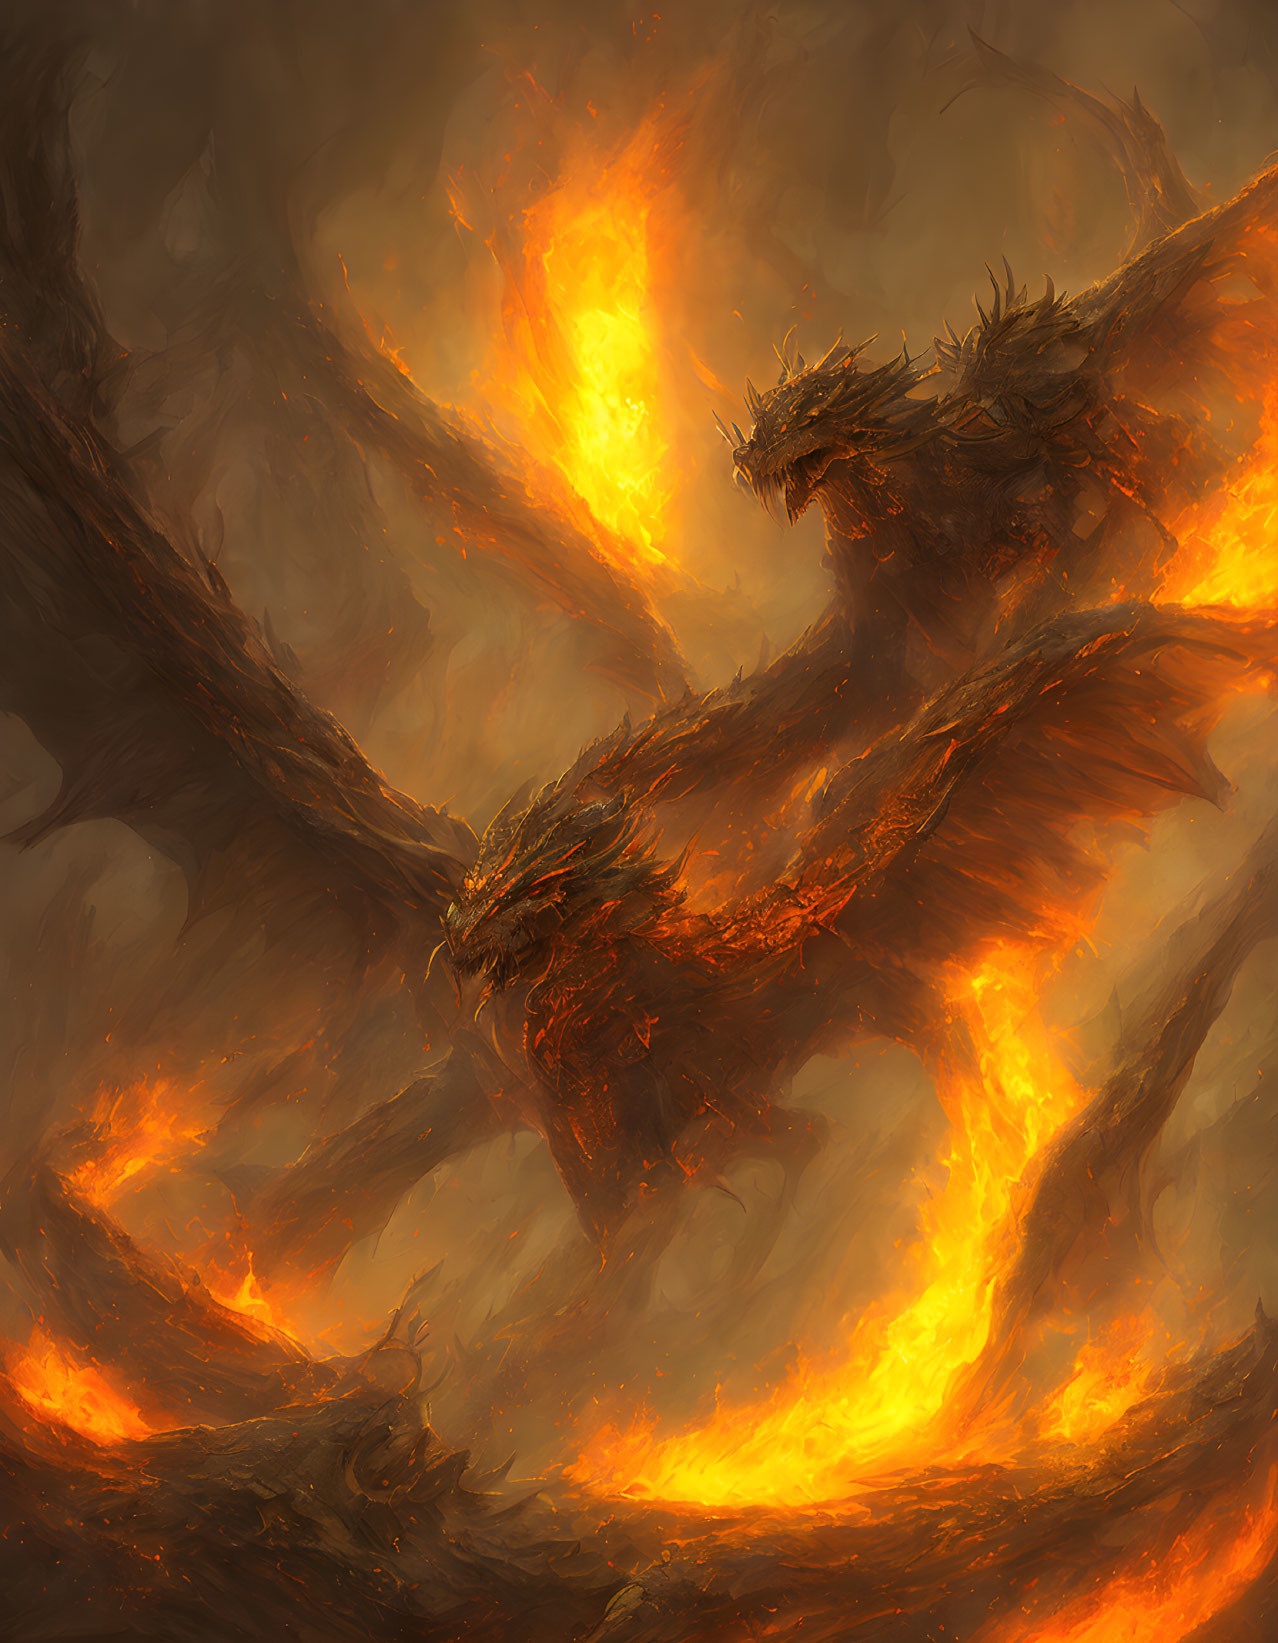 Fiery dragon with wings ablaze in smoky surroundings